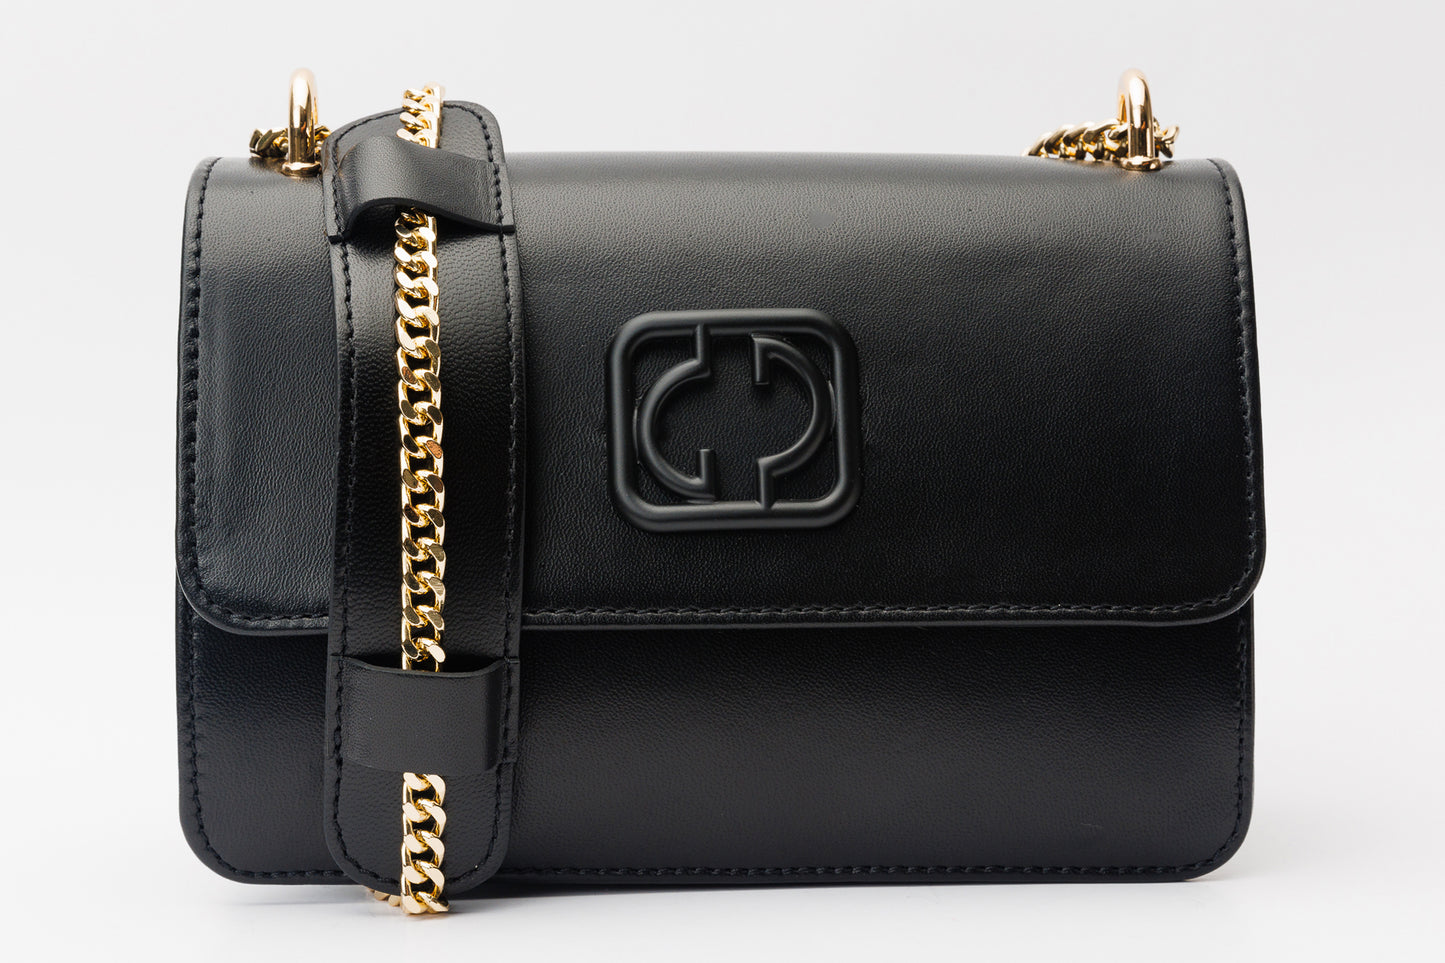 The Maneadero Black Leather Handbag